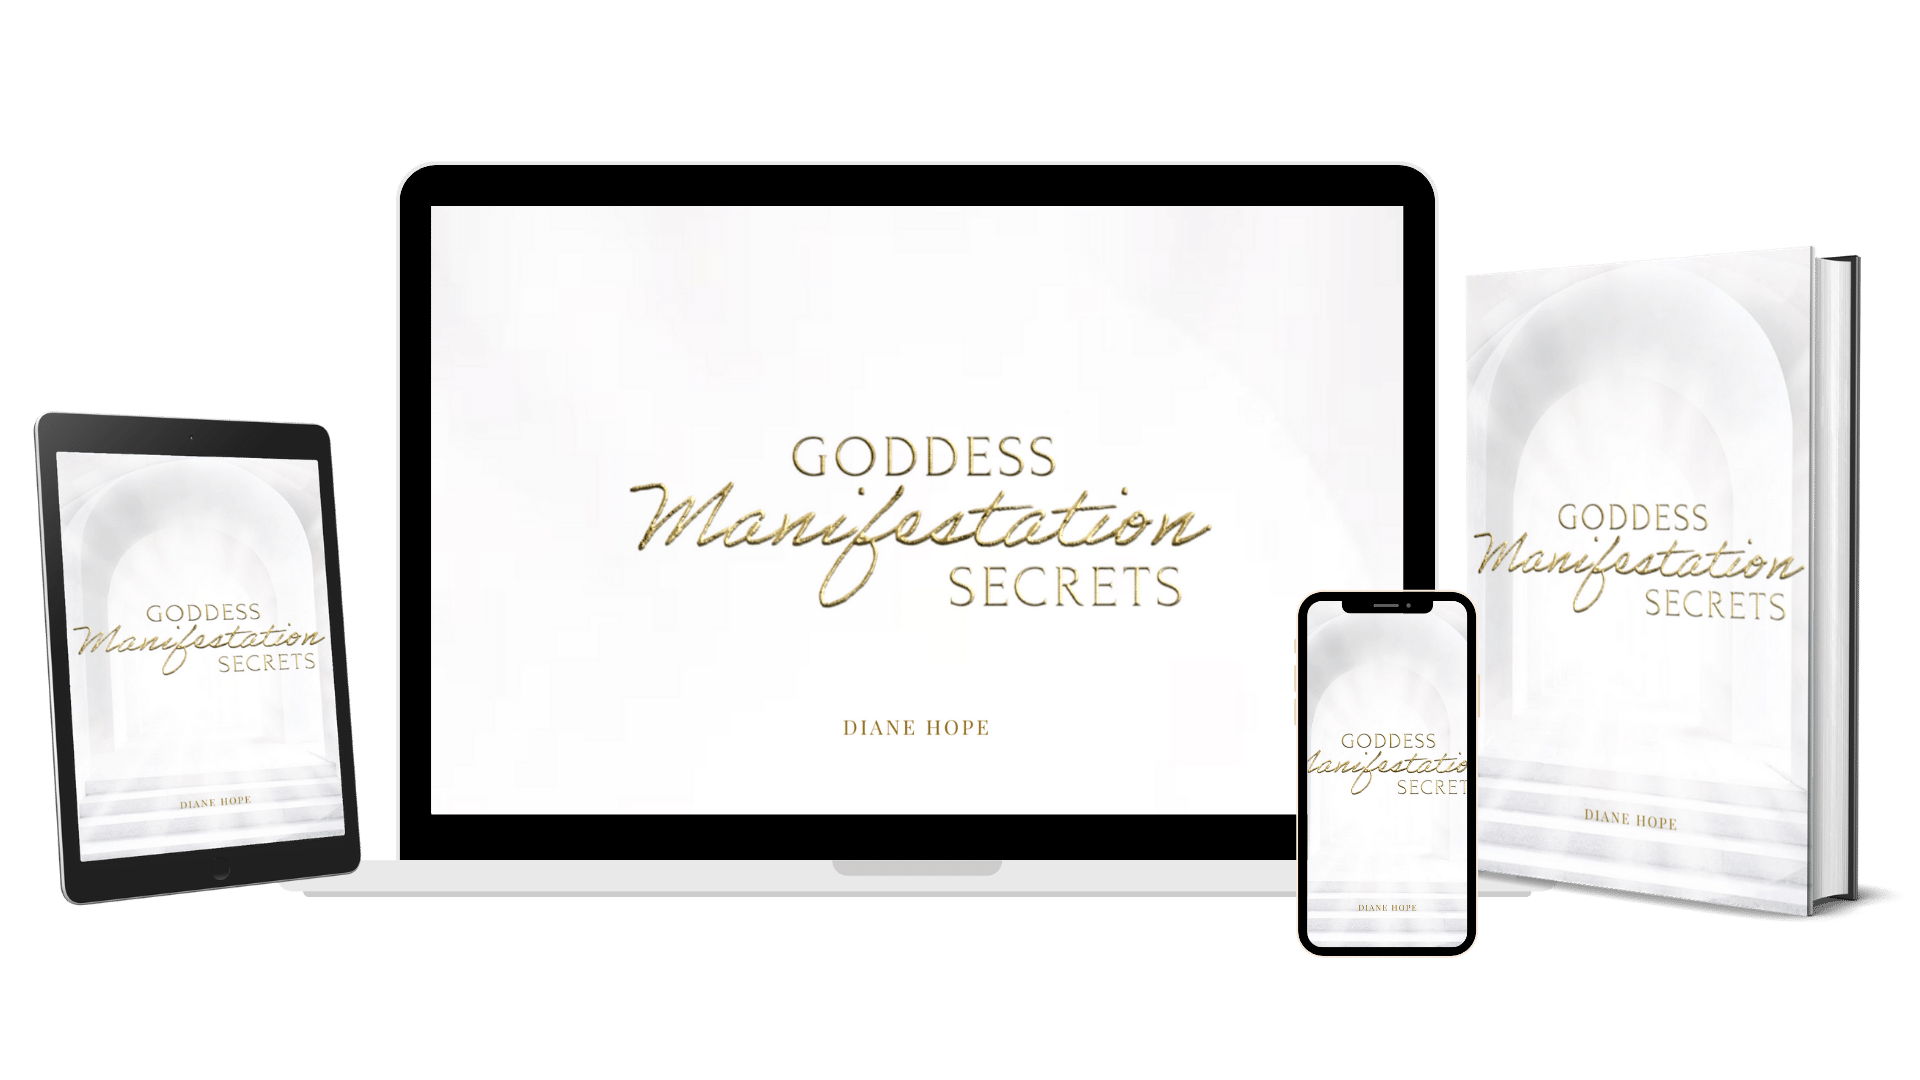 Goddess Manifestation Secrets Bonus-Goddess Manifestation Secrets Handbook